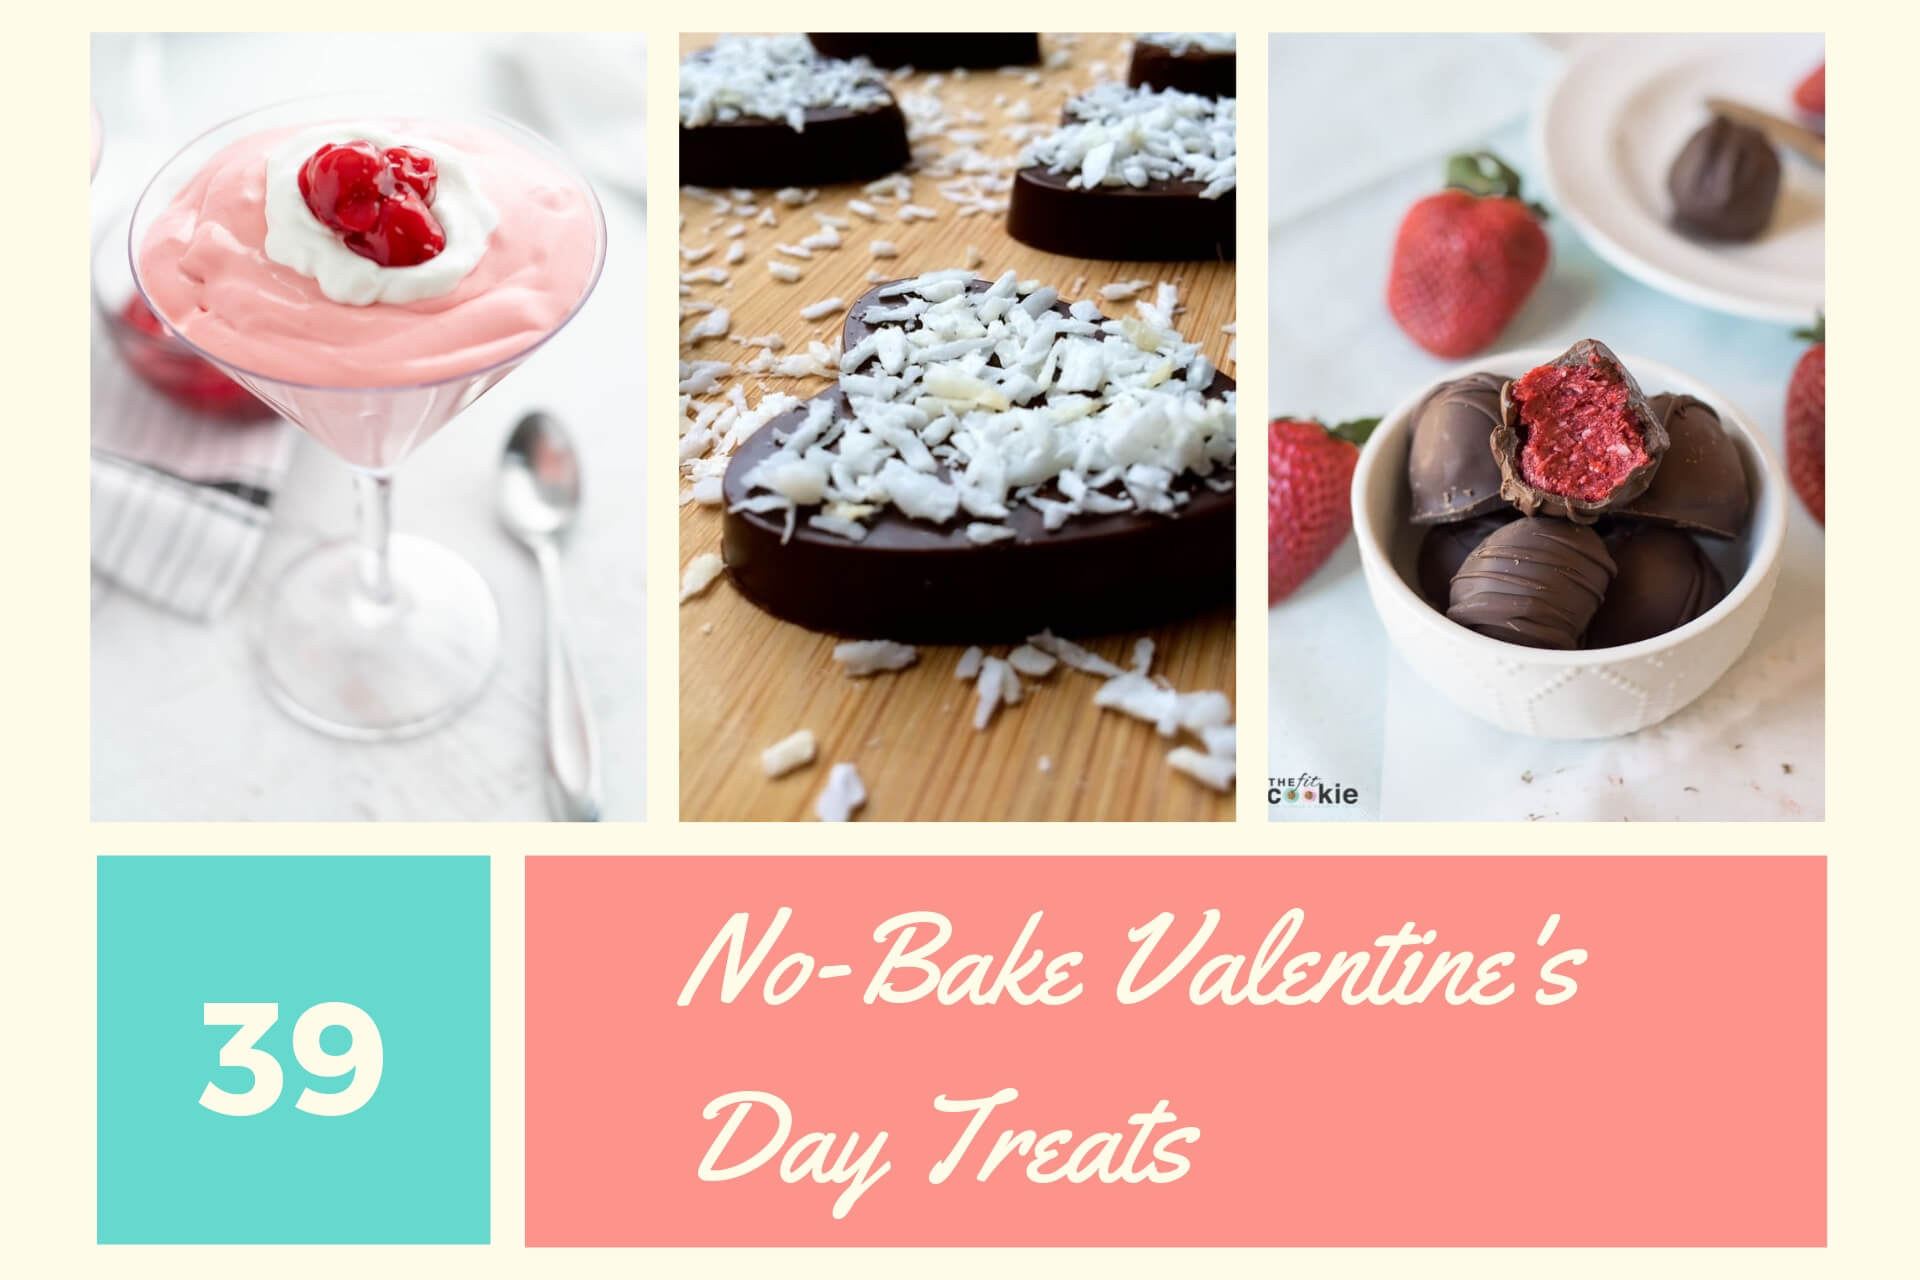 39 No-Bake Valentine’s Day Treats to Try!